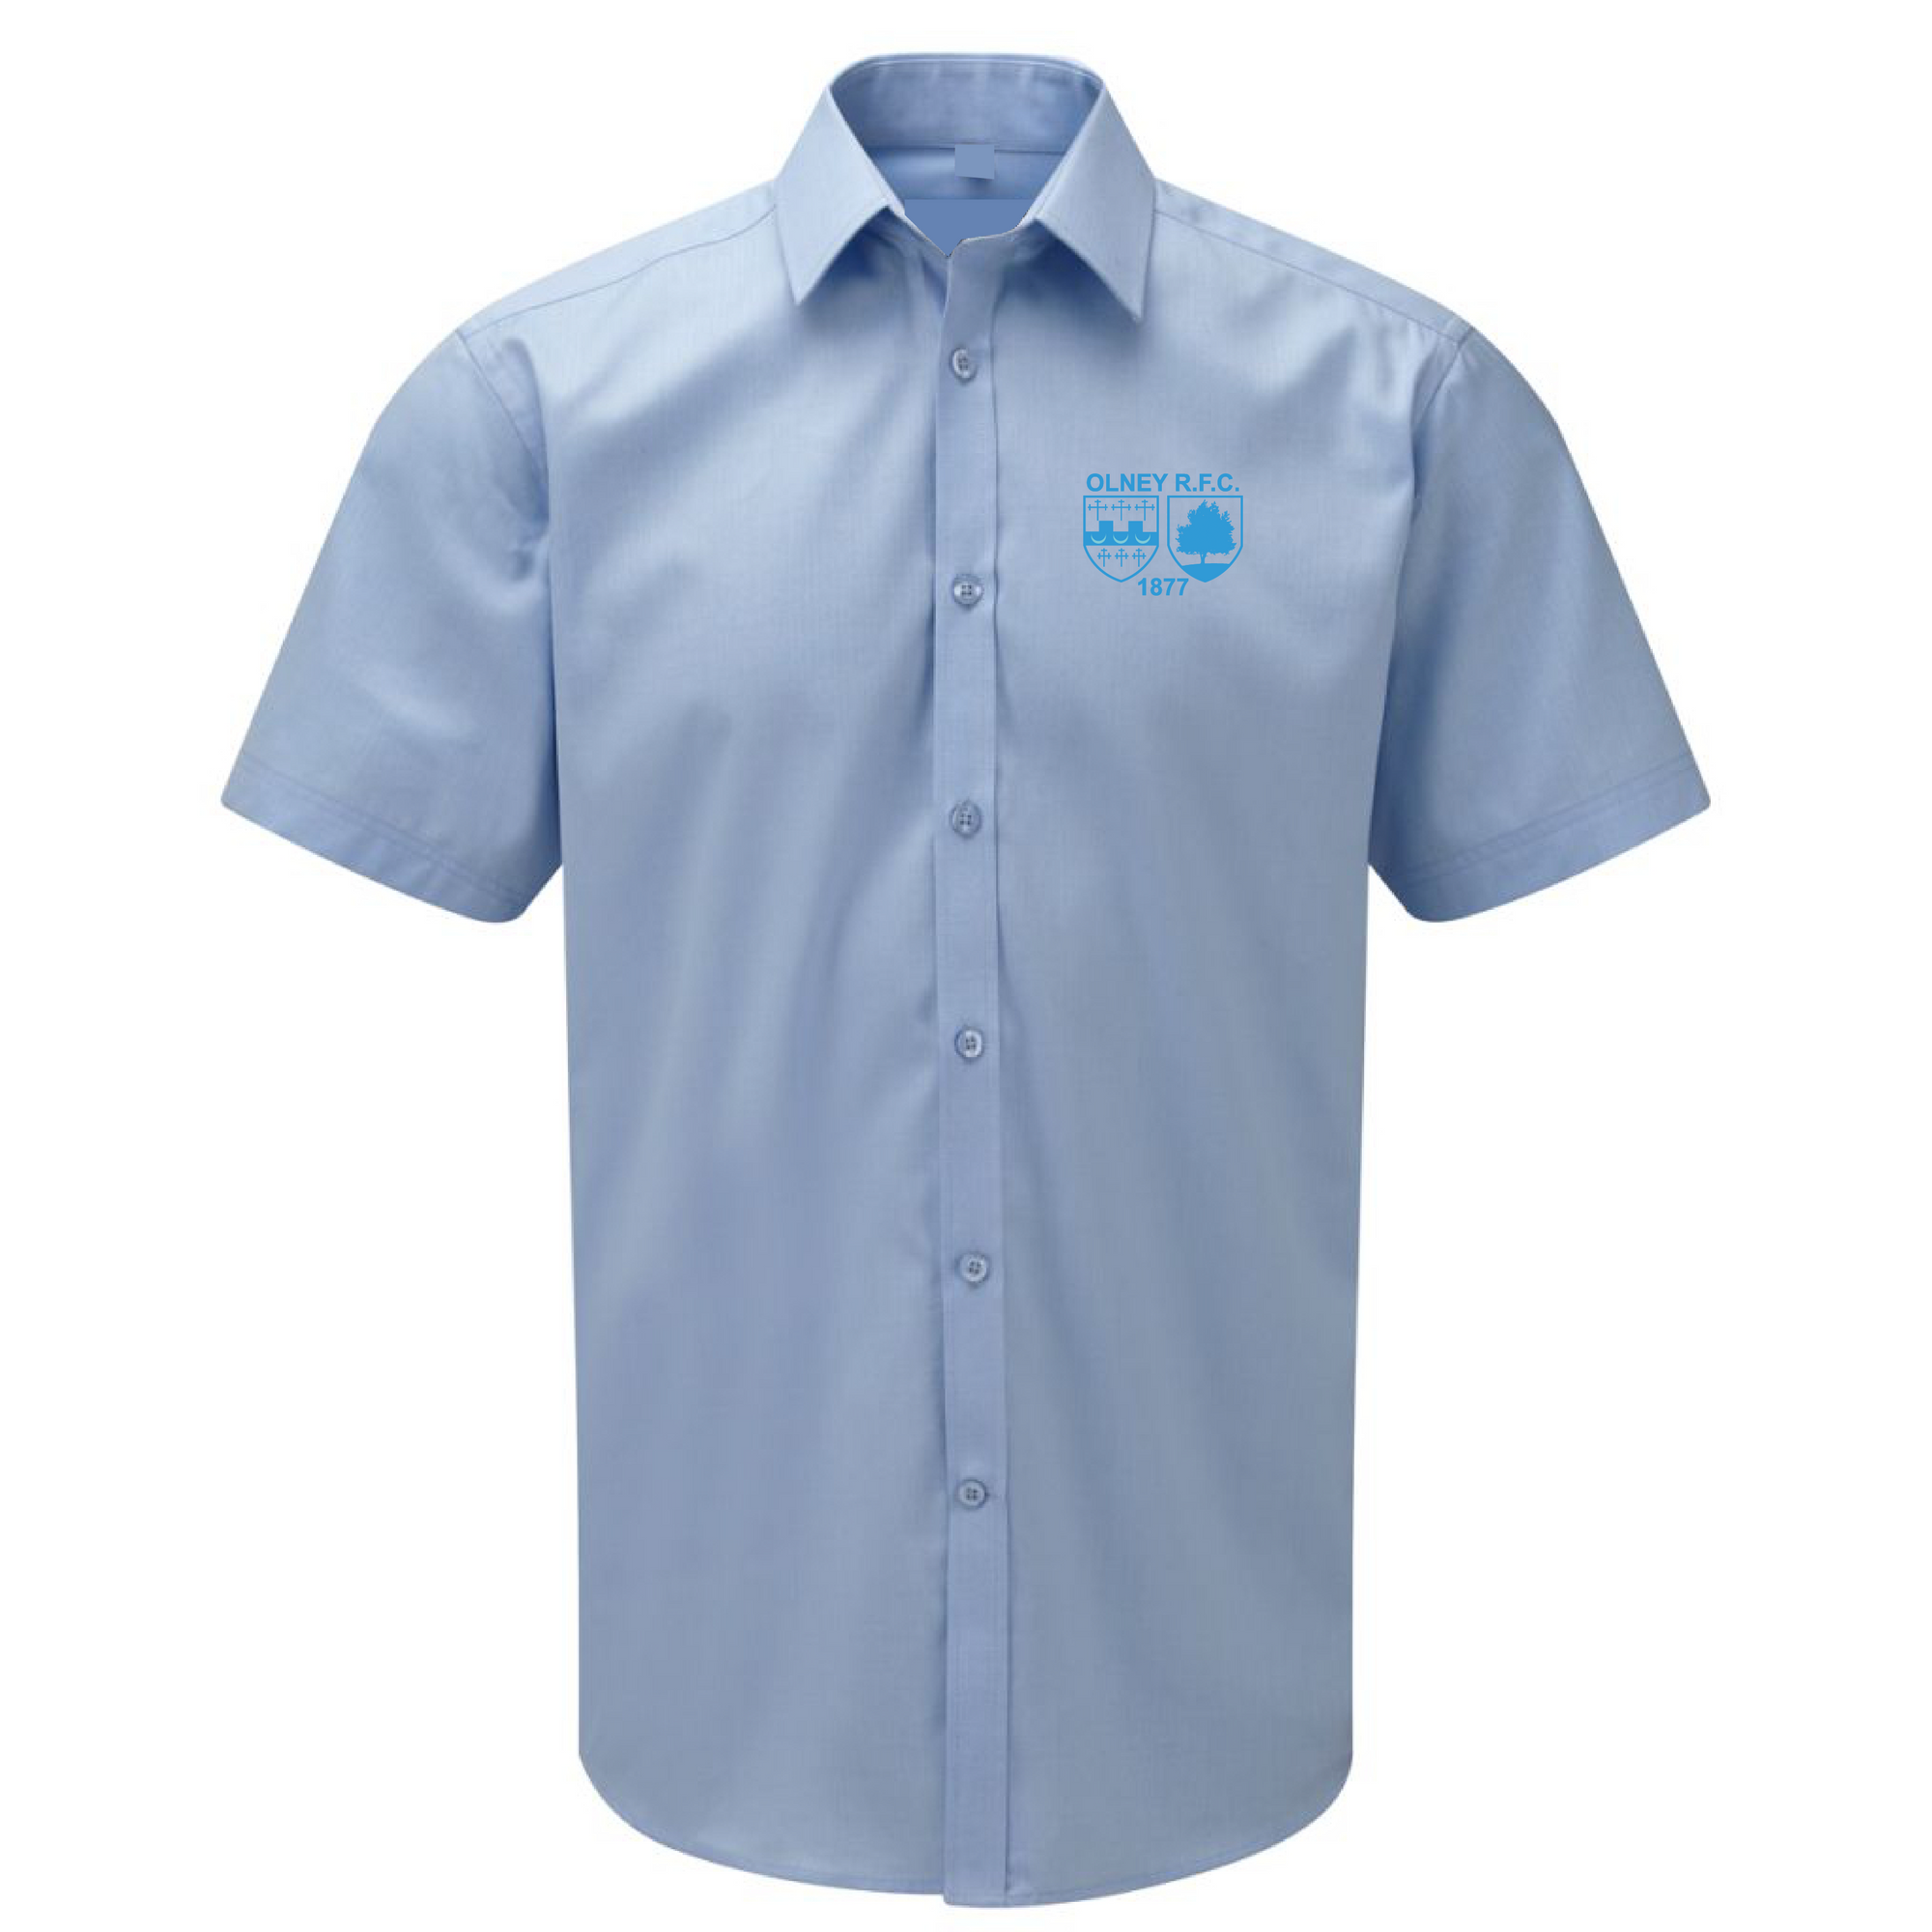 Olney RFC Short Sleeve Shirt - Light blue